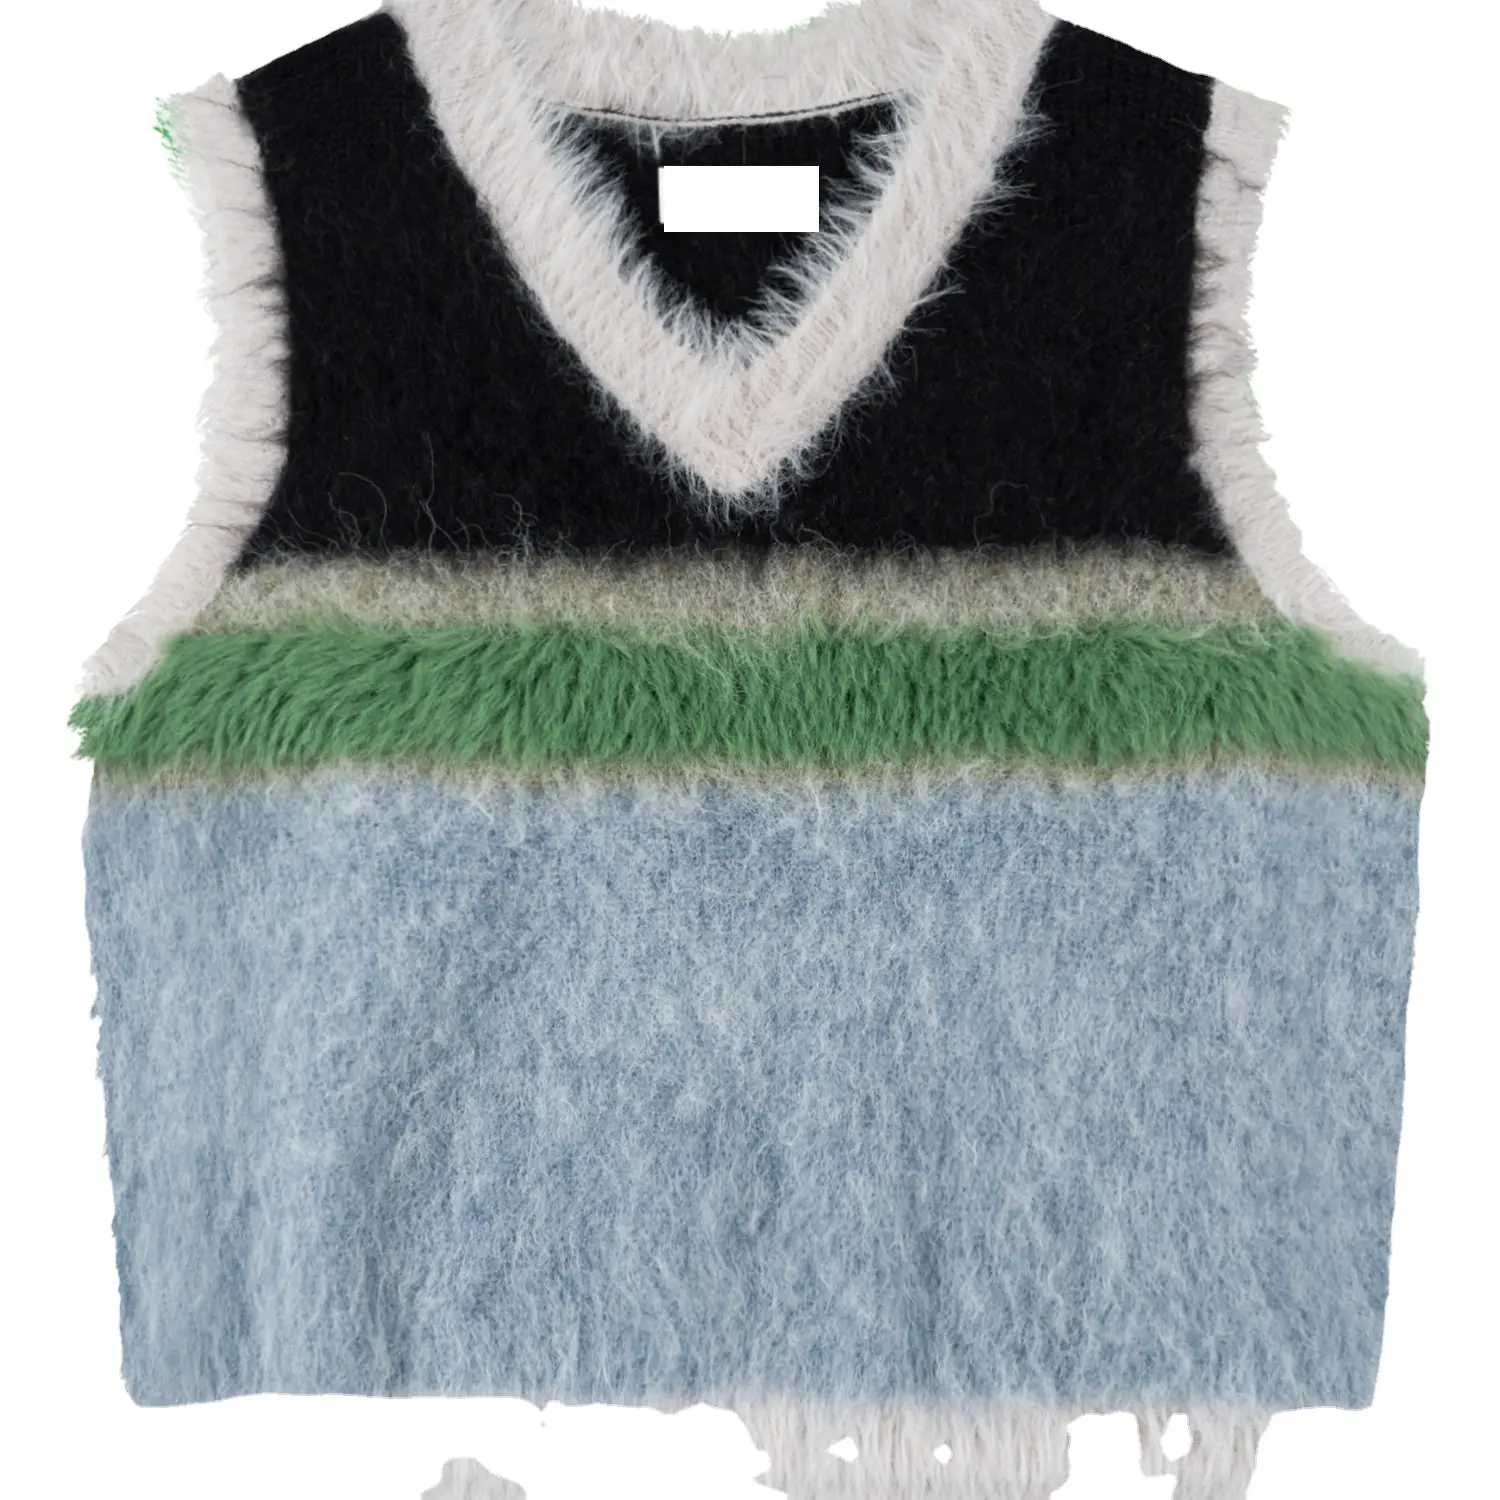 Senior Custom wool cashmere Knitted coat Knitwear men shadow Turbot cotton sleeveless Sweater vest